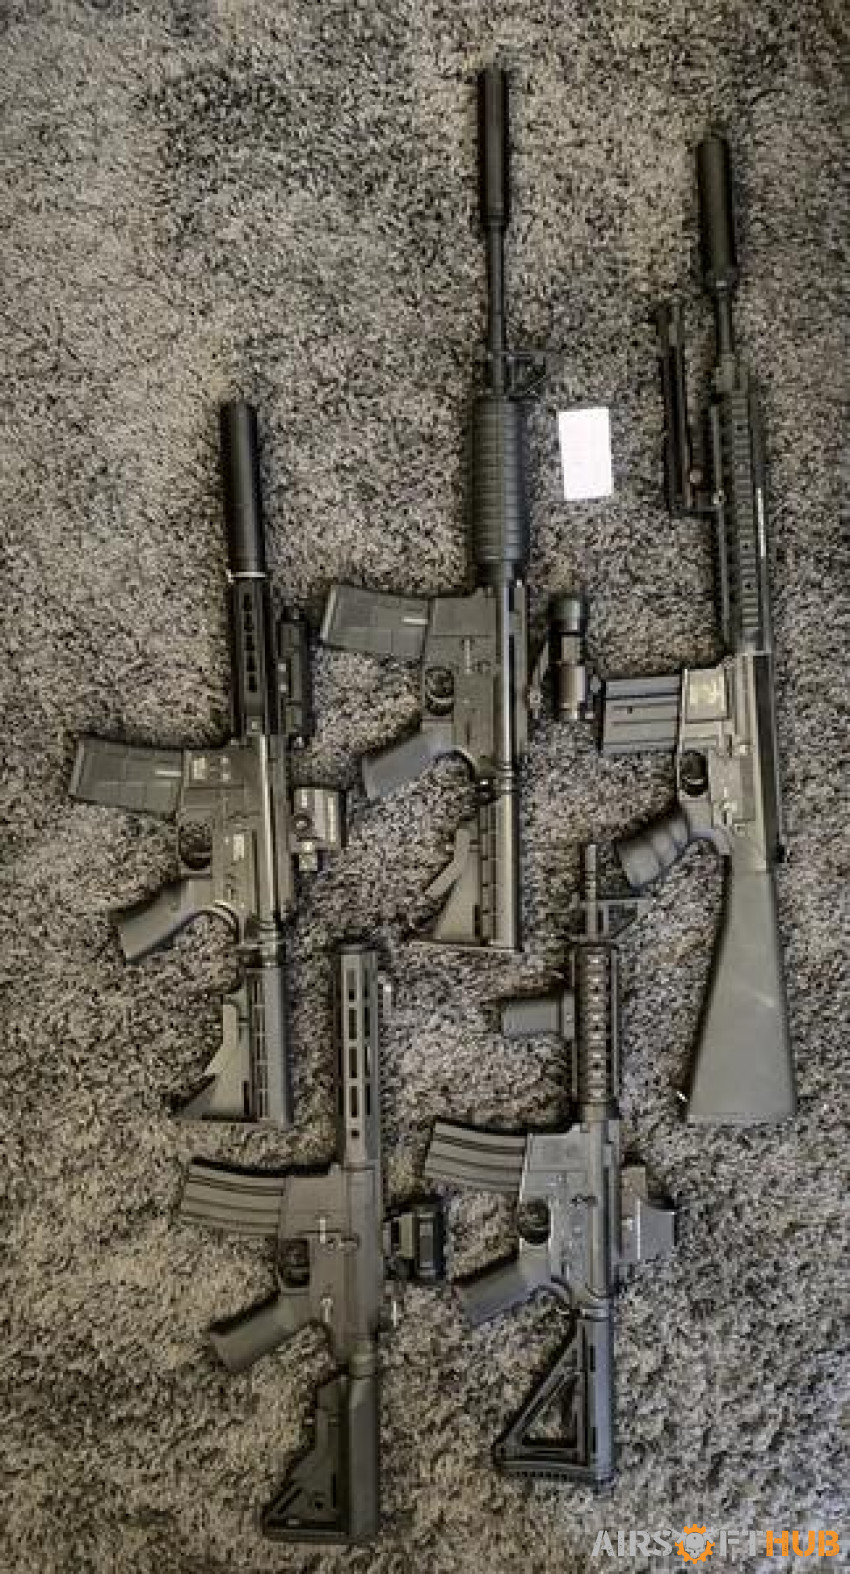 Job lot of rifles - Used airsoft equipment